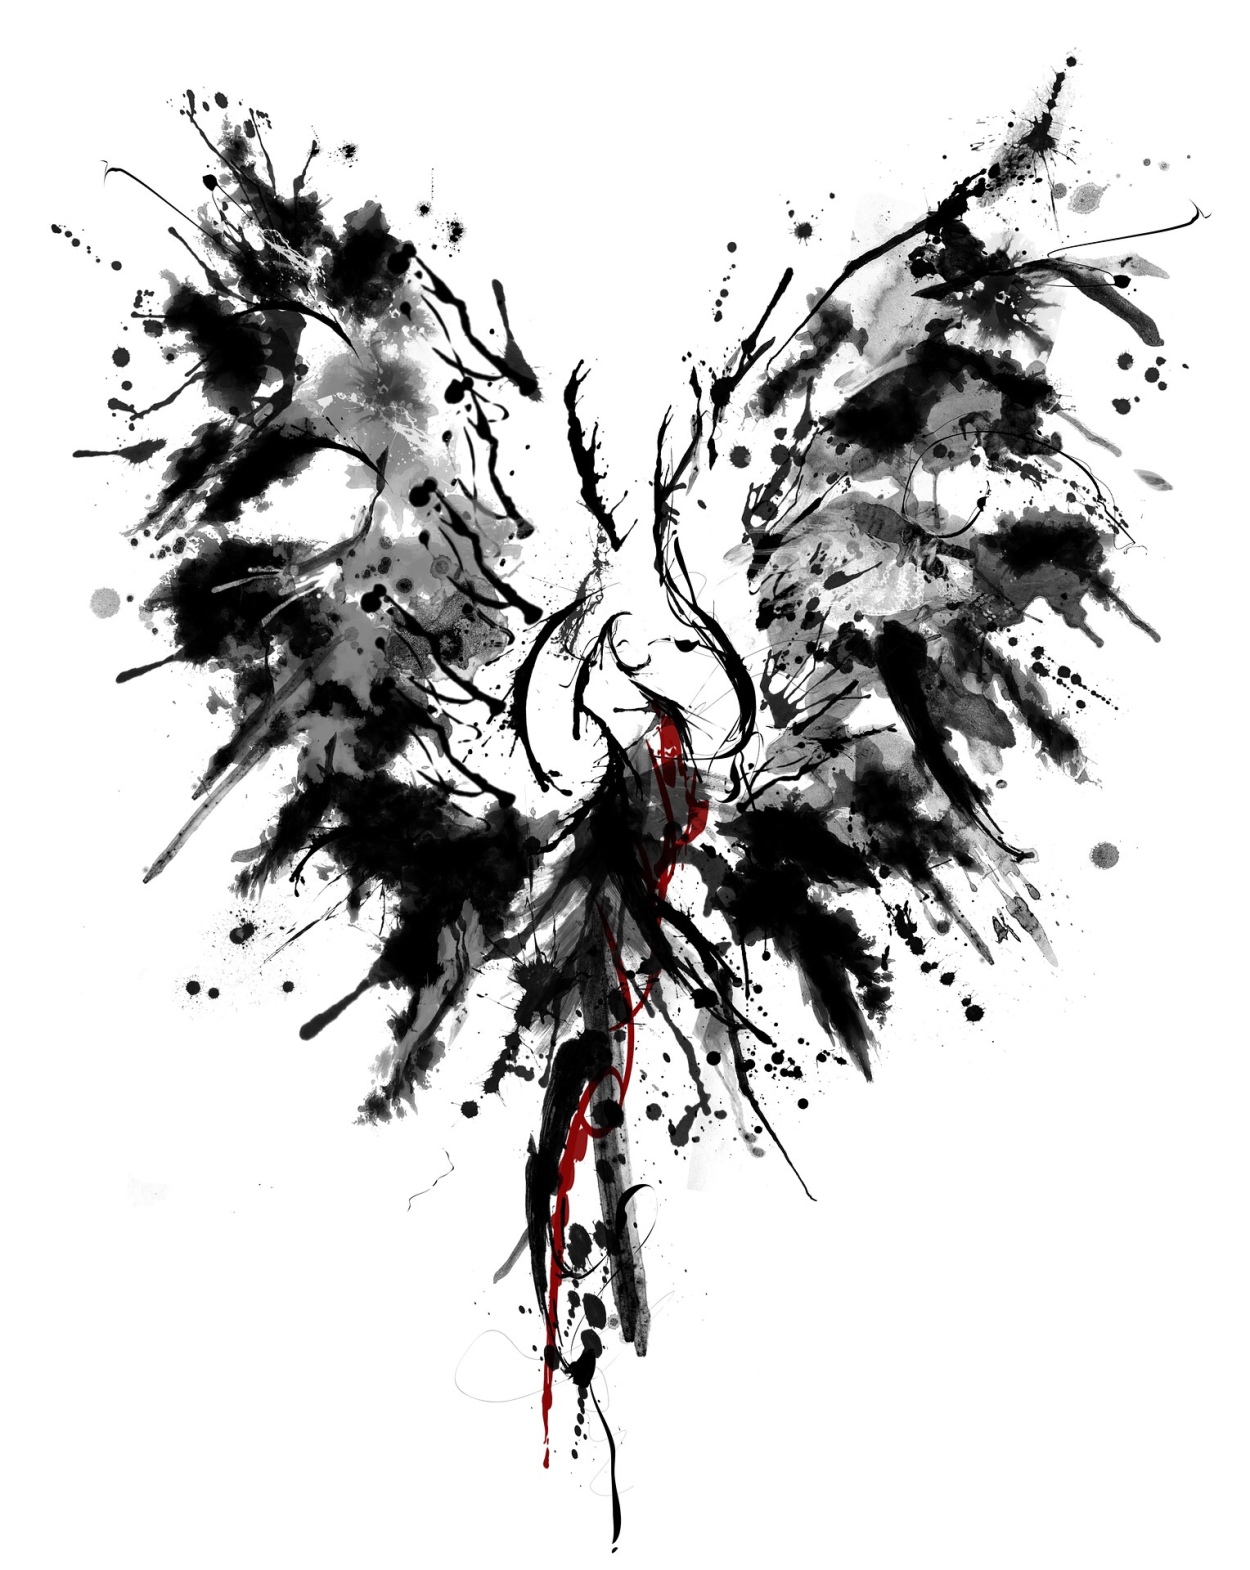 Black and white image of a Phoenix by https://pixabay.com/users/johannairis-1979488/